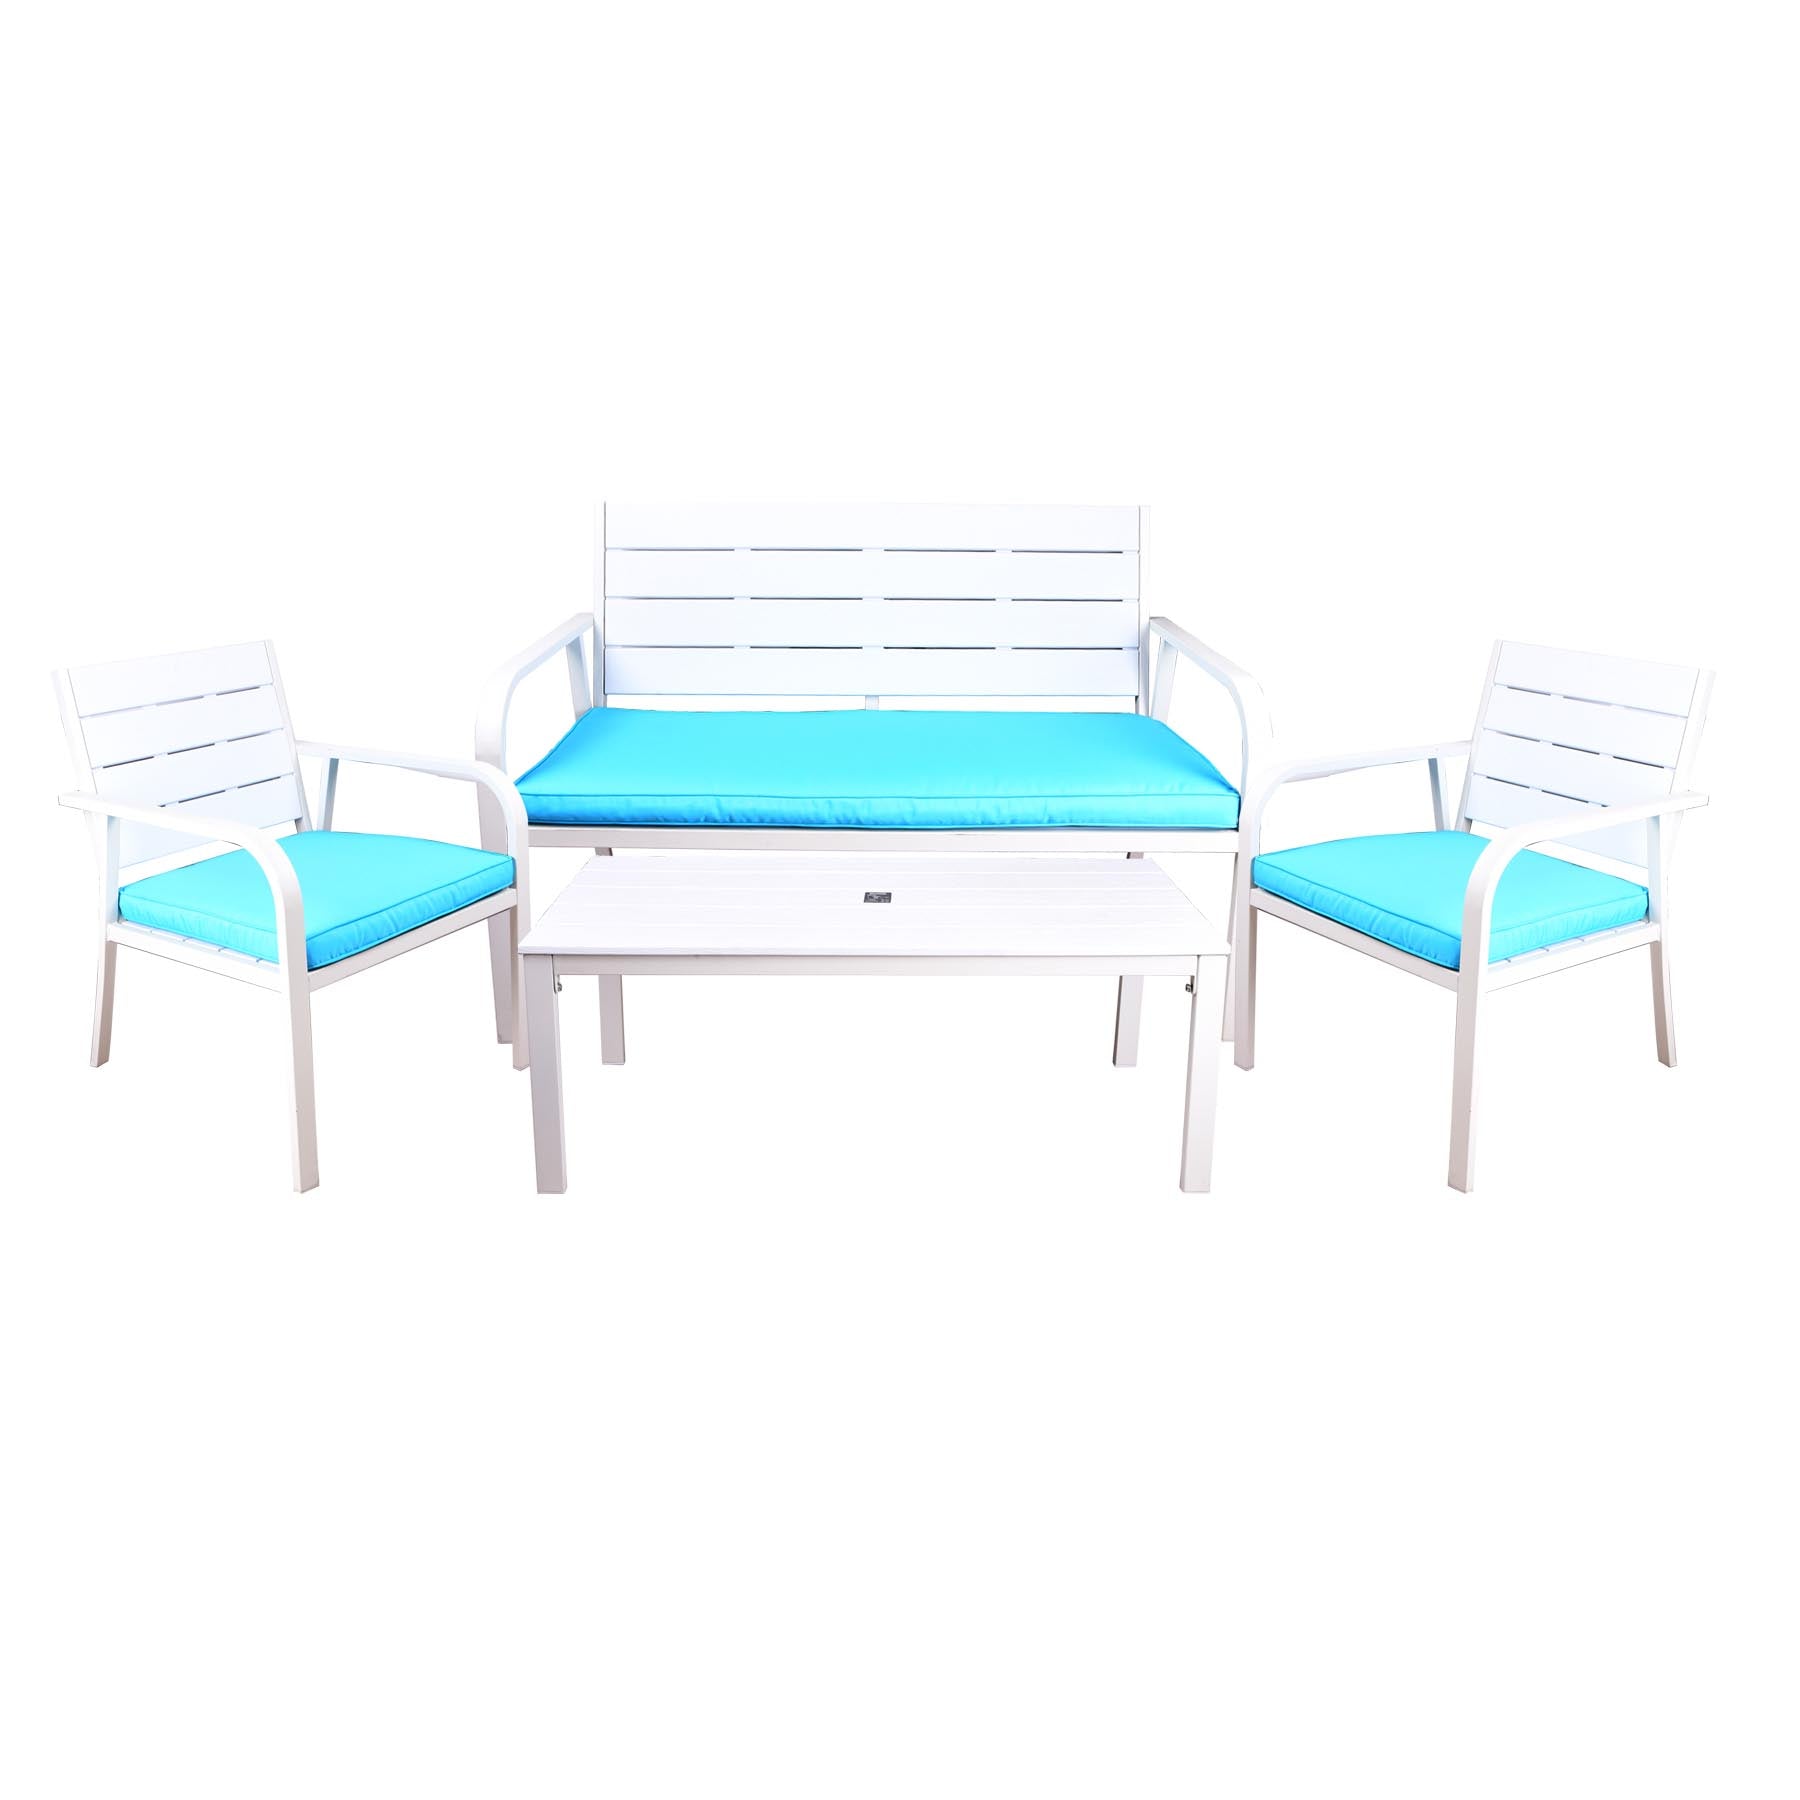 Garden furniture 4 pieces set - Blue & White color